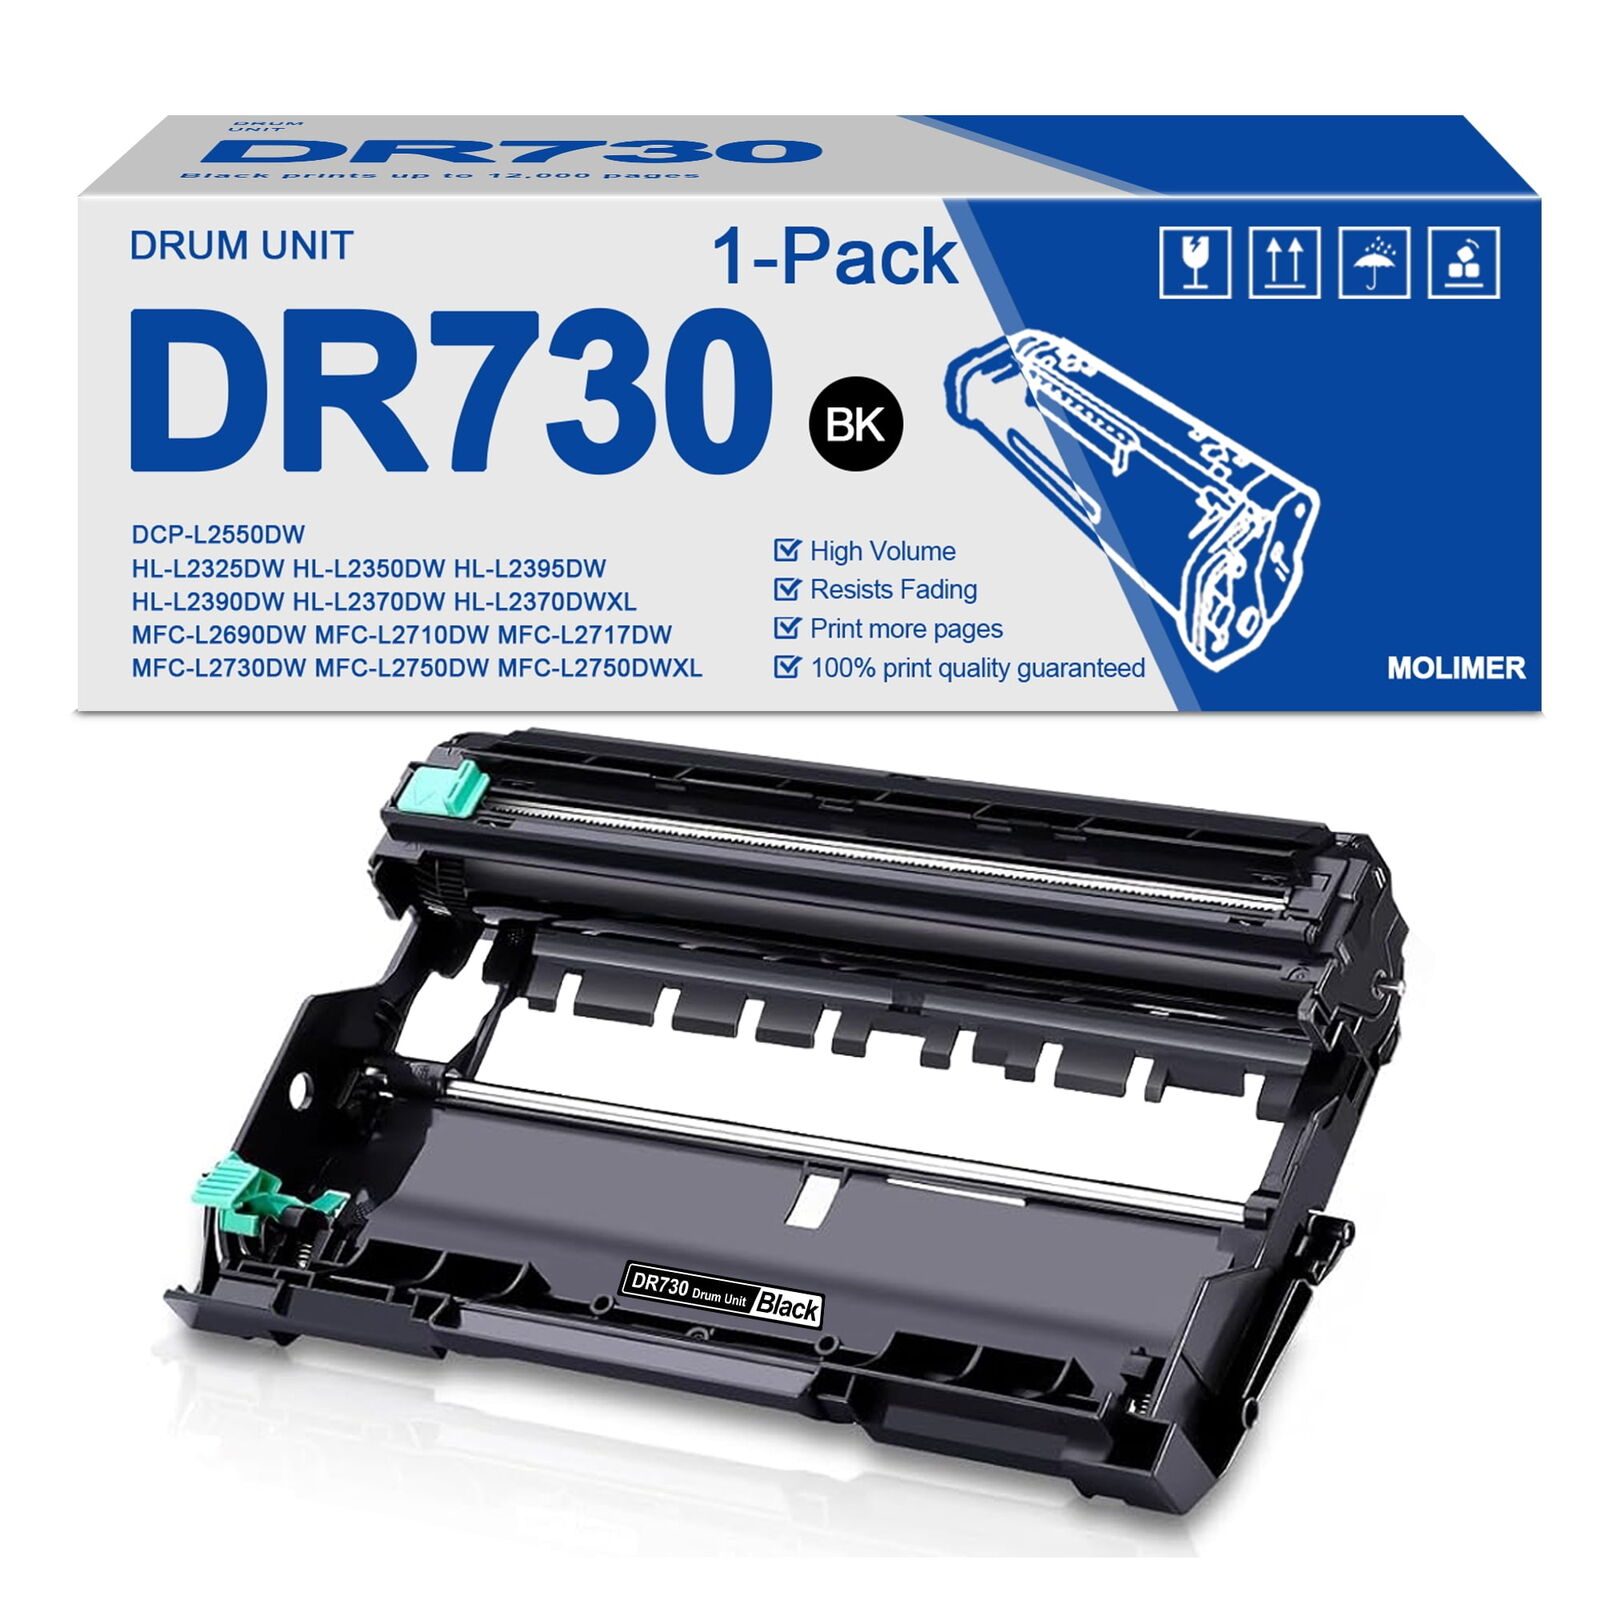 DR730 Drum Unit Replacement for Brother DR730 HL-L2370DW MFC-L2710DW Printer